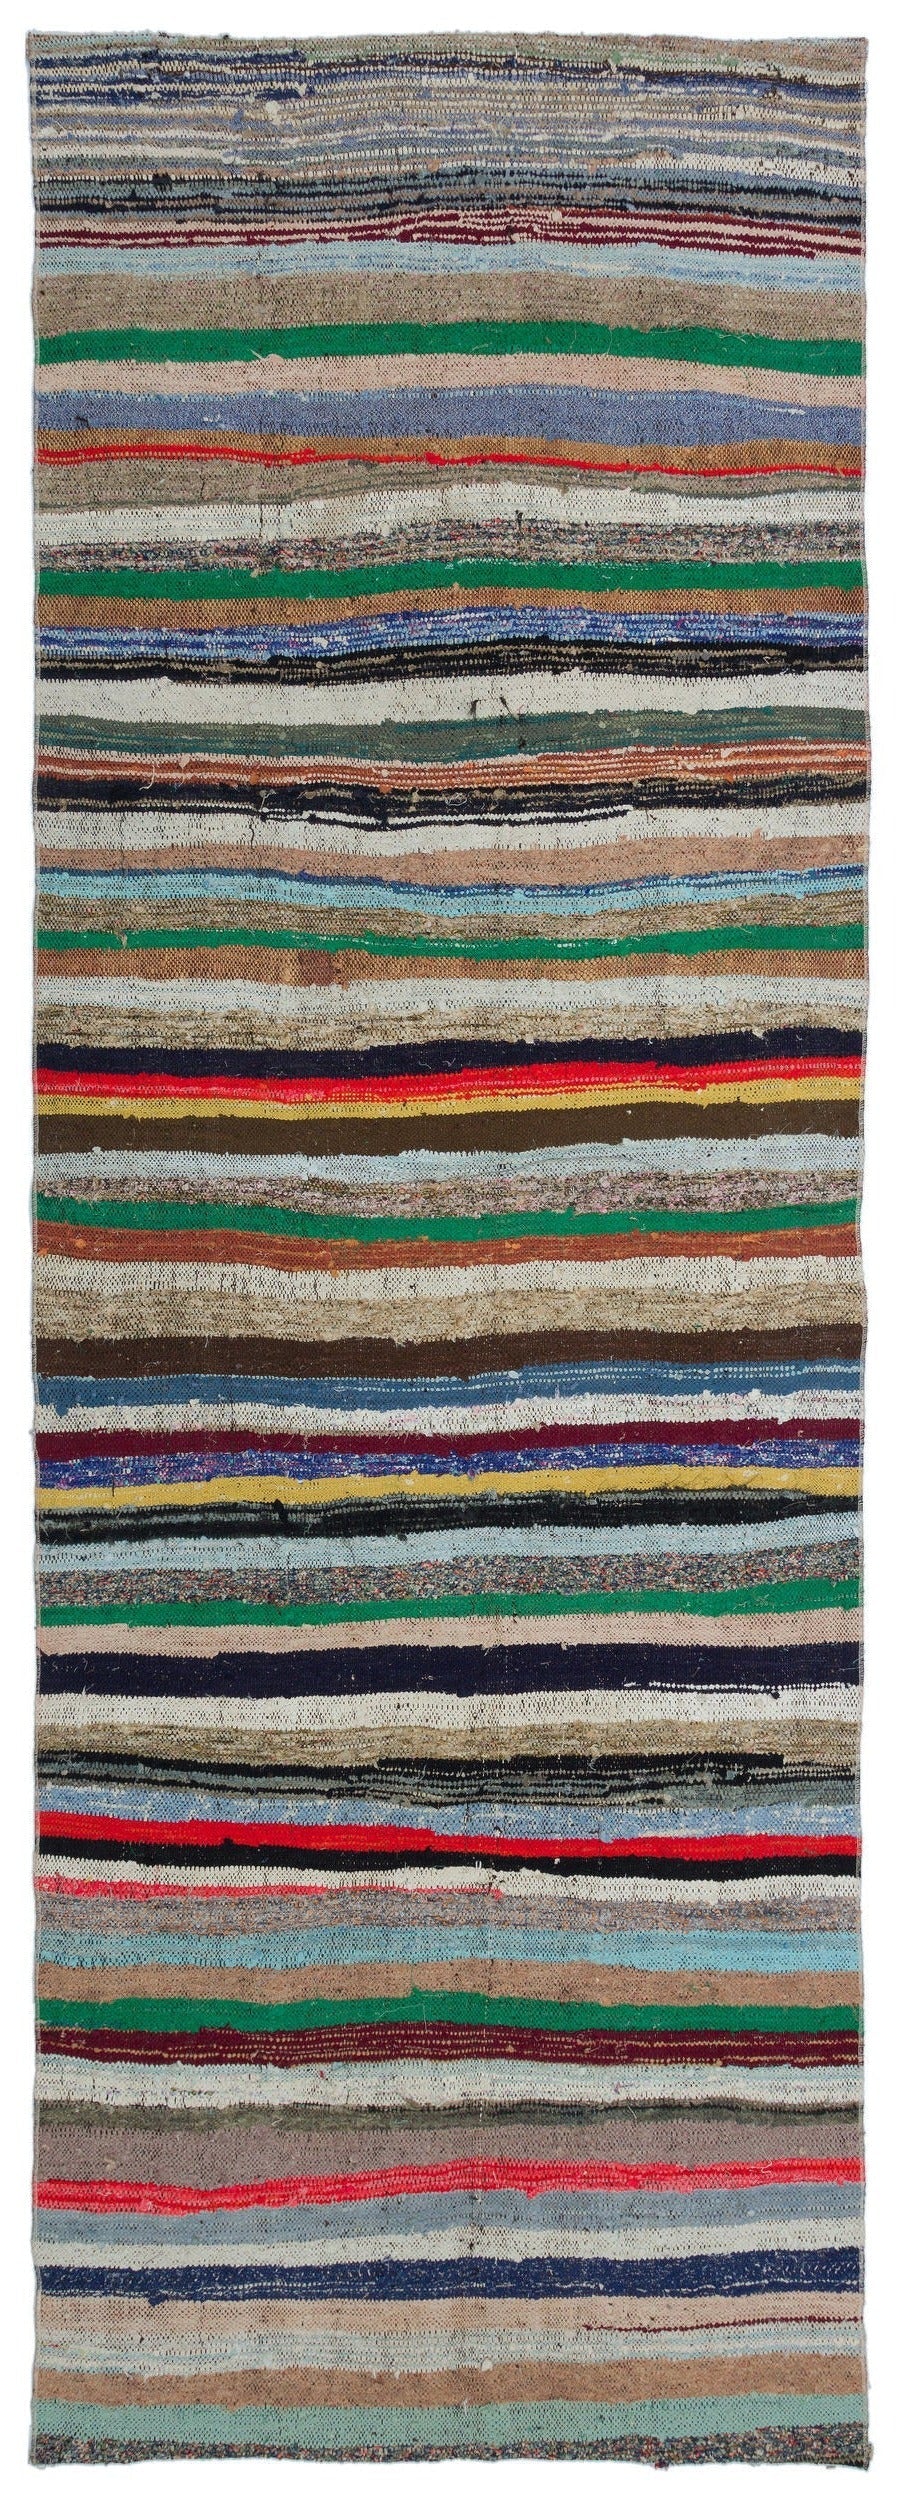 Cretan Beige Striped Wool Hand-Woven Carpet 113 x 325